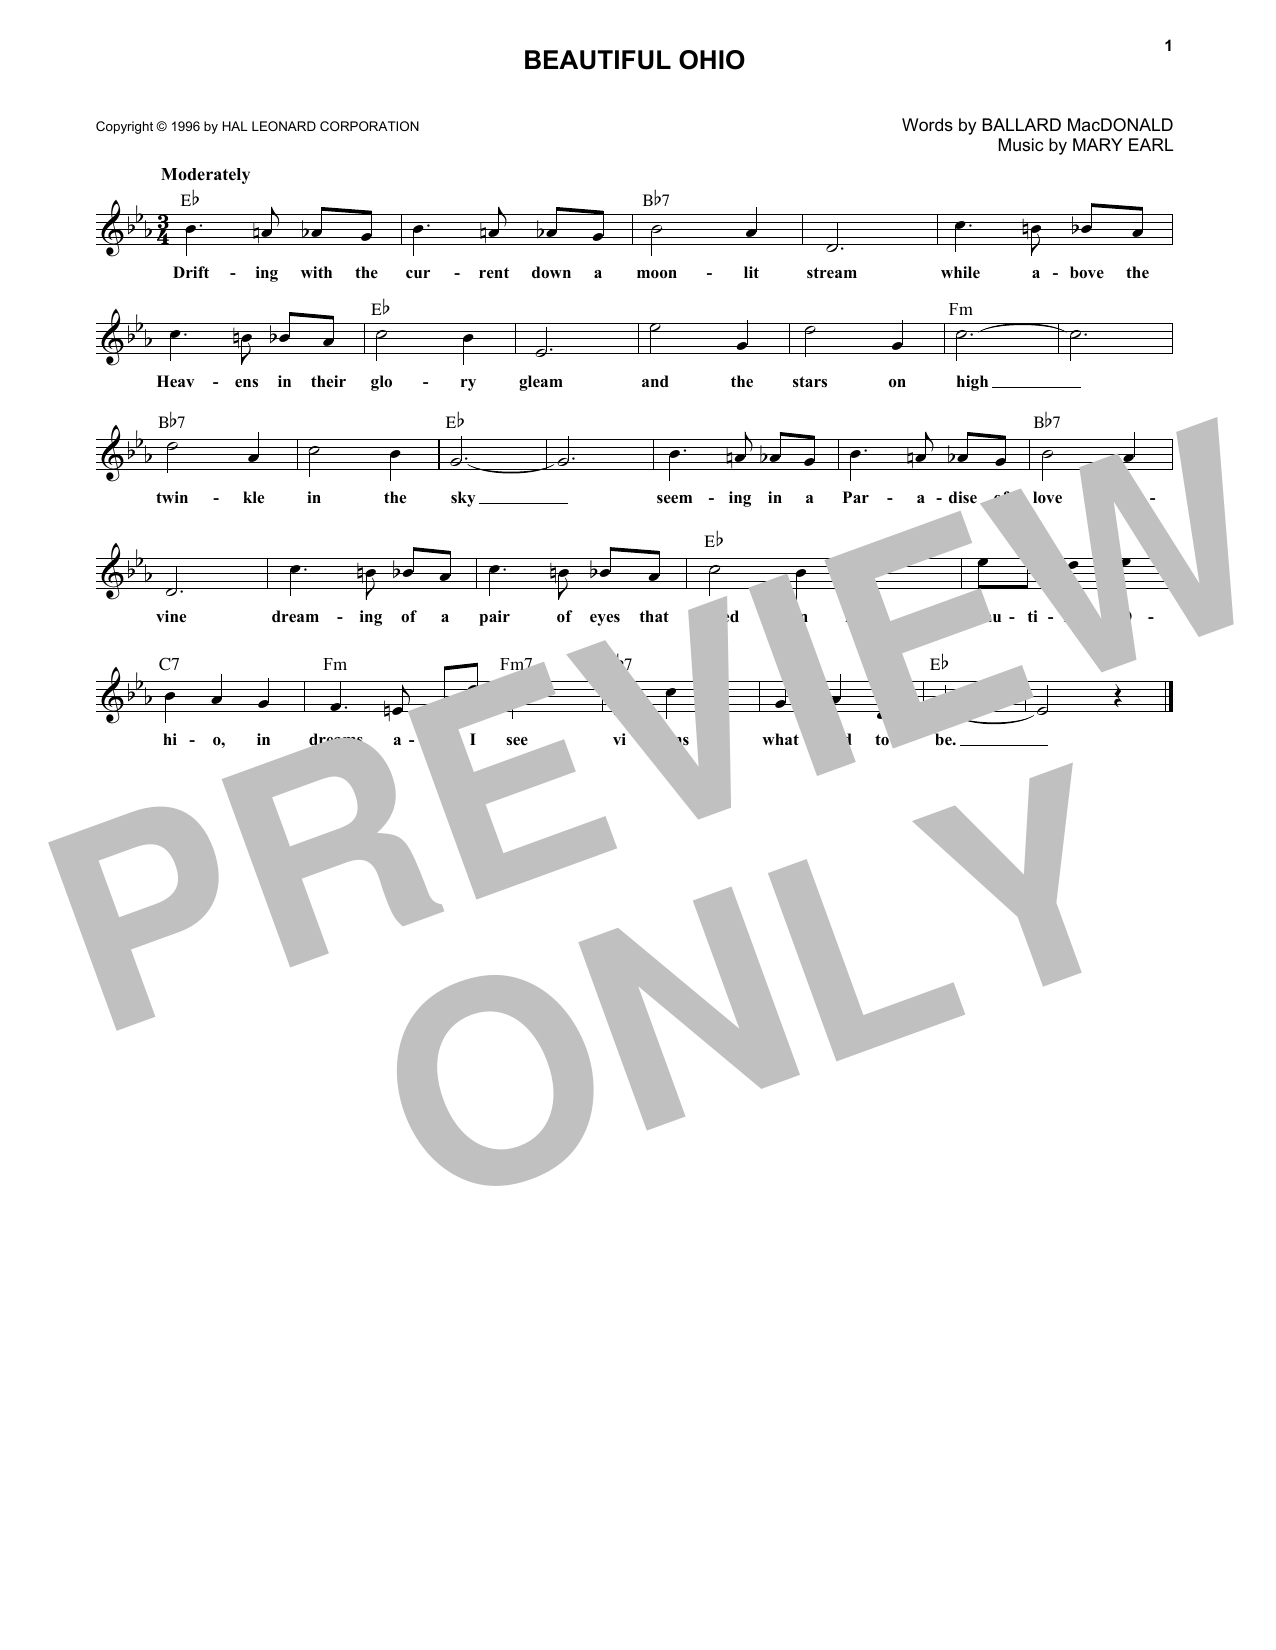 Download Ballard MacDonald Beautiful Ohio Sheet Music and learn how to play Melody Line, Lyrics & Chords PDF digital score in minutes